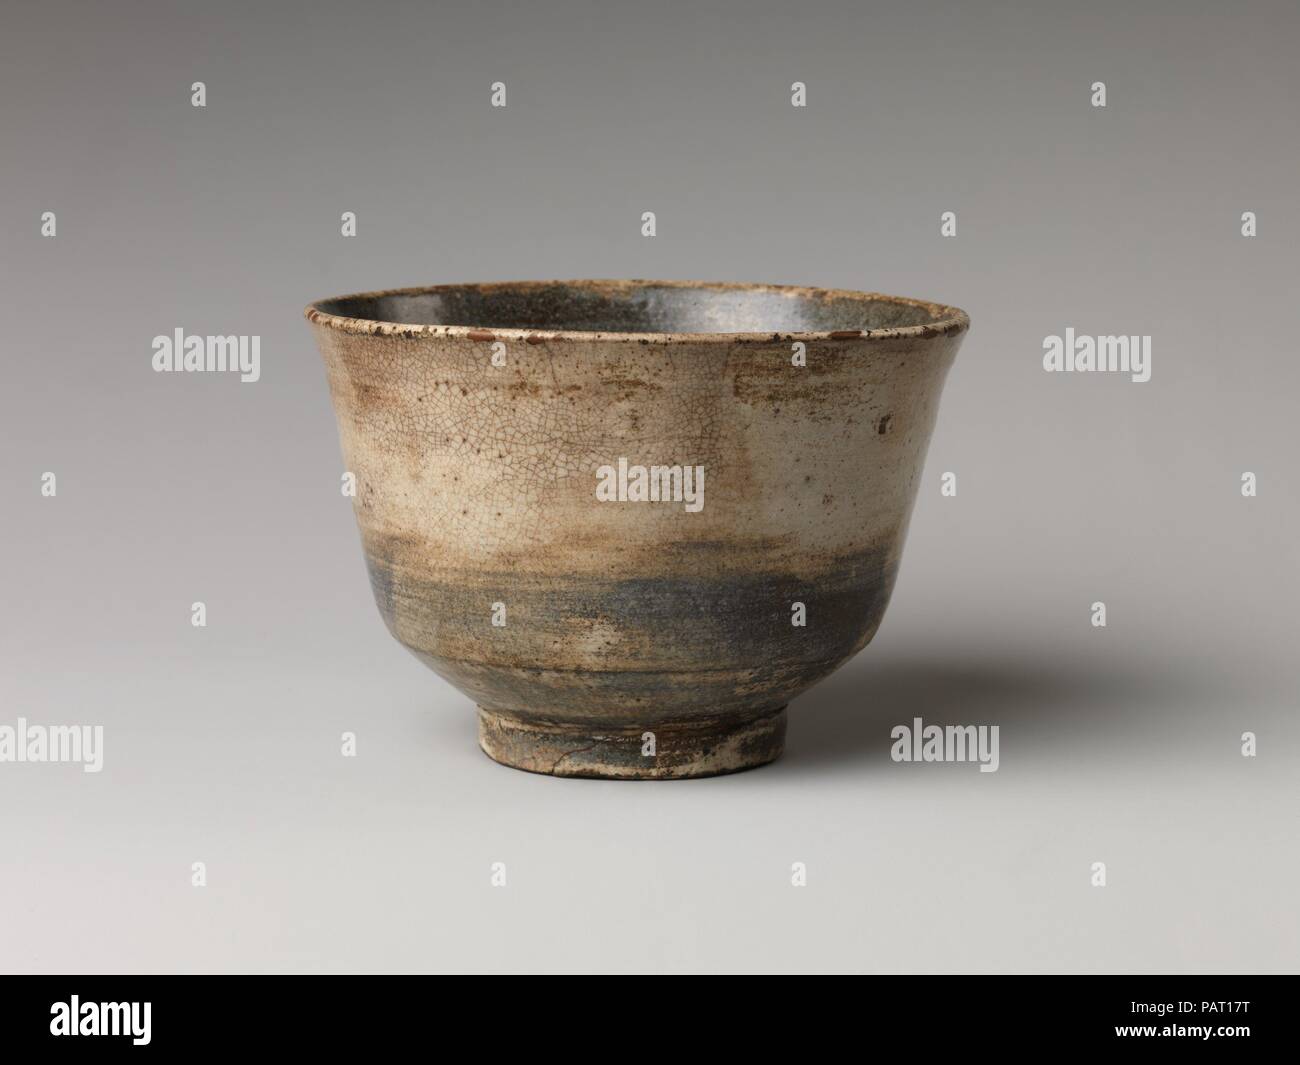 Bowl. Culture: Japan. Dimensions: H. 3 1/2 in. (8.9 cm); Diam. 5 5/8 in. (14.3 cm). Date: 19th century. Museum: Metropolitan Museum of Art, New York, USA. Stock Photo